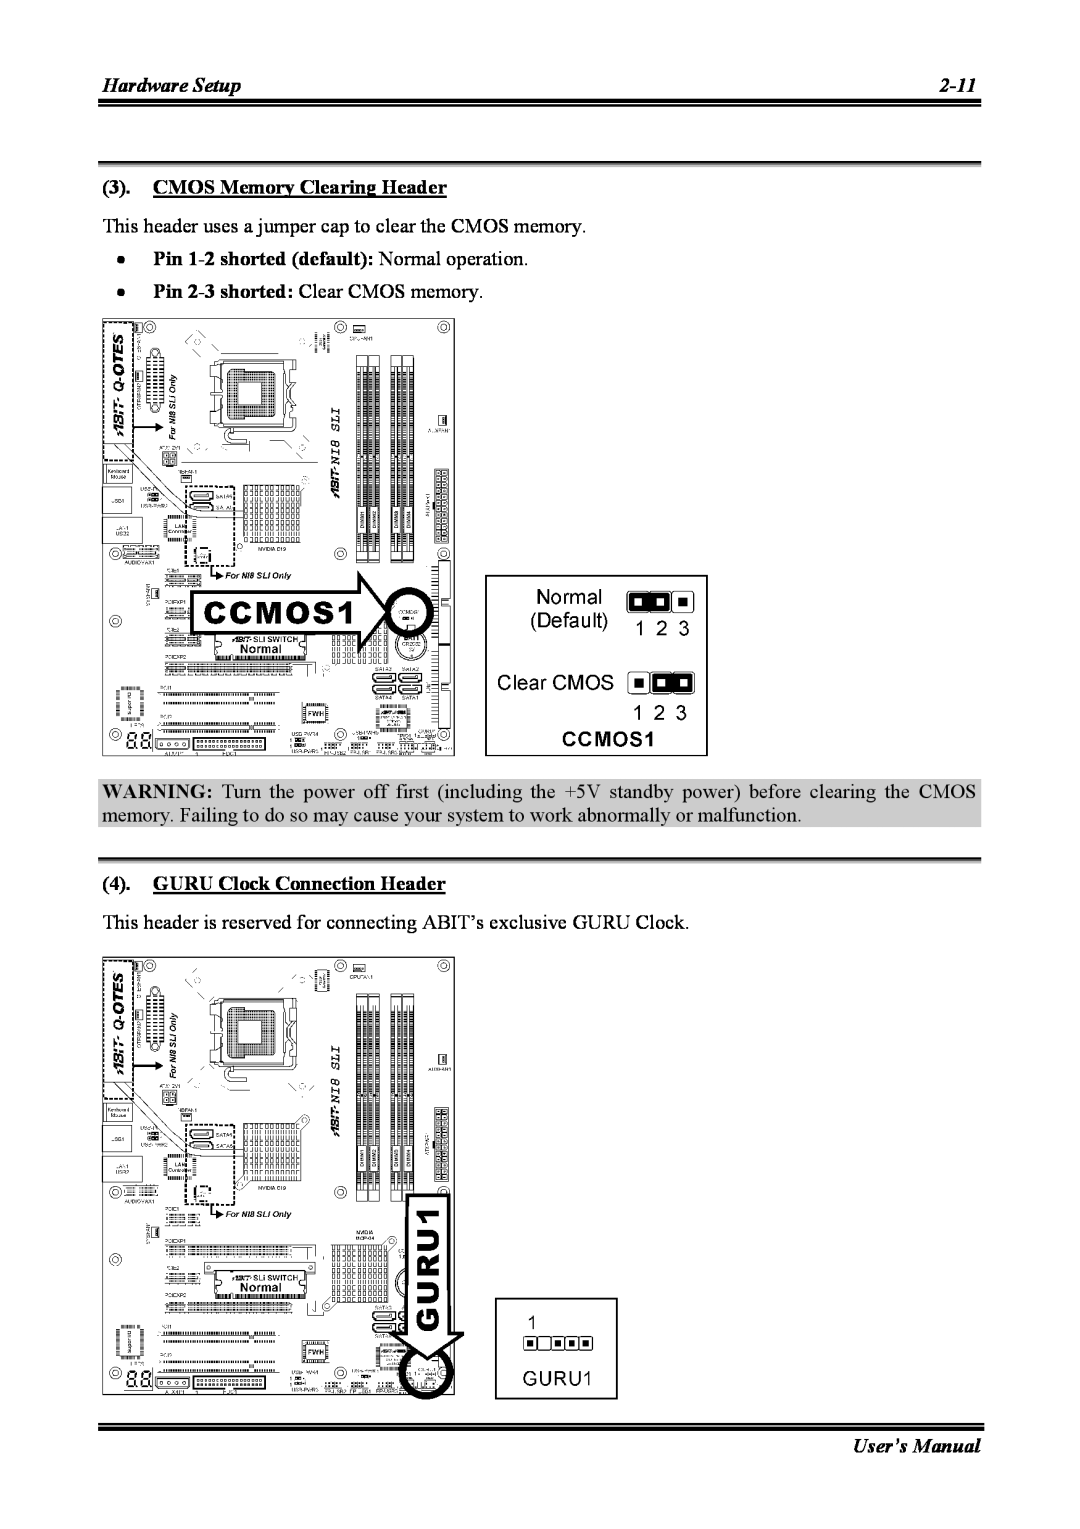 Abit NI8 SLI CMOS Memory Clearing Header, Pin 1-2 shorted default Normal operation, GURU Clock Connection Header 